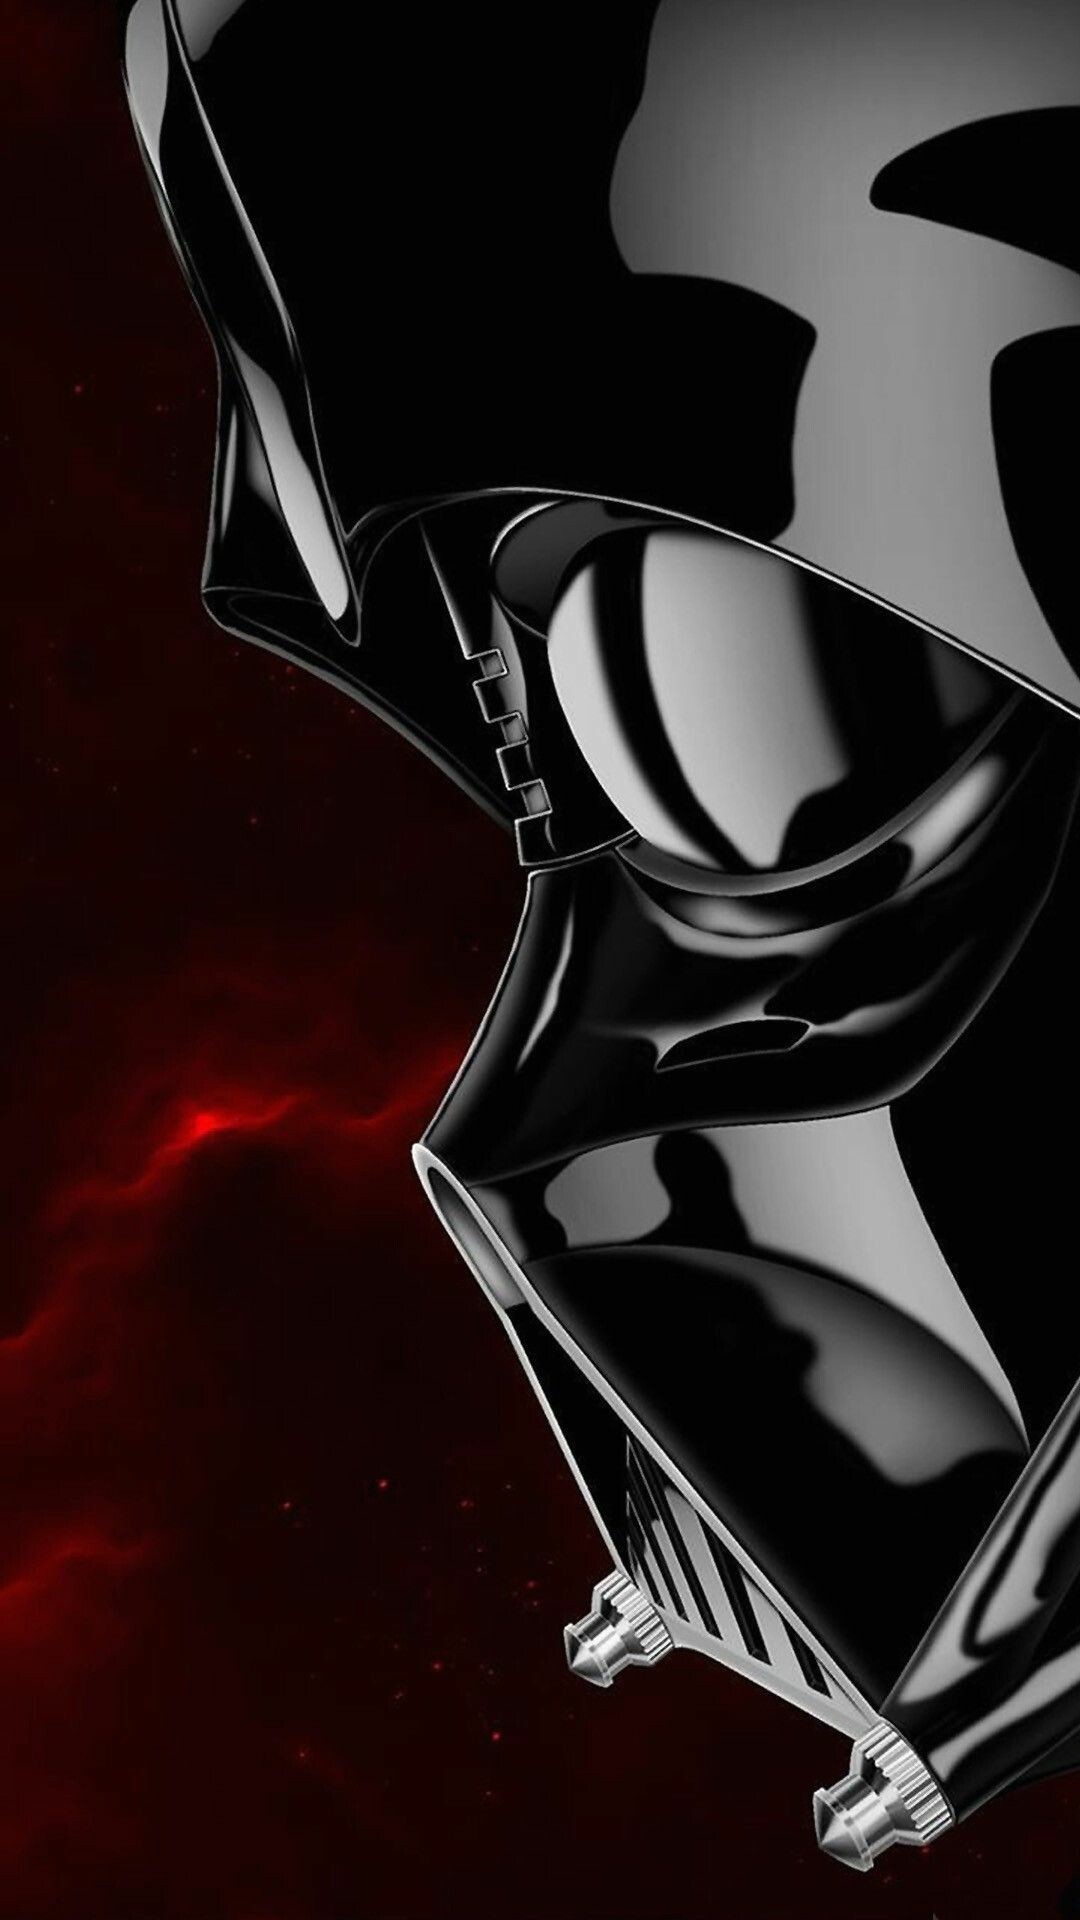 Star Wars: Darth Vader, The central antagonist of the original trilogy. 1080x1920 Full HD Wallpaper.